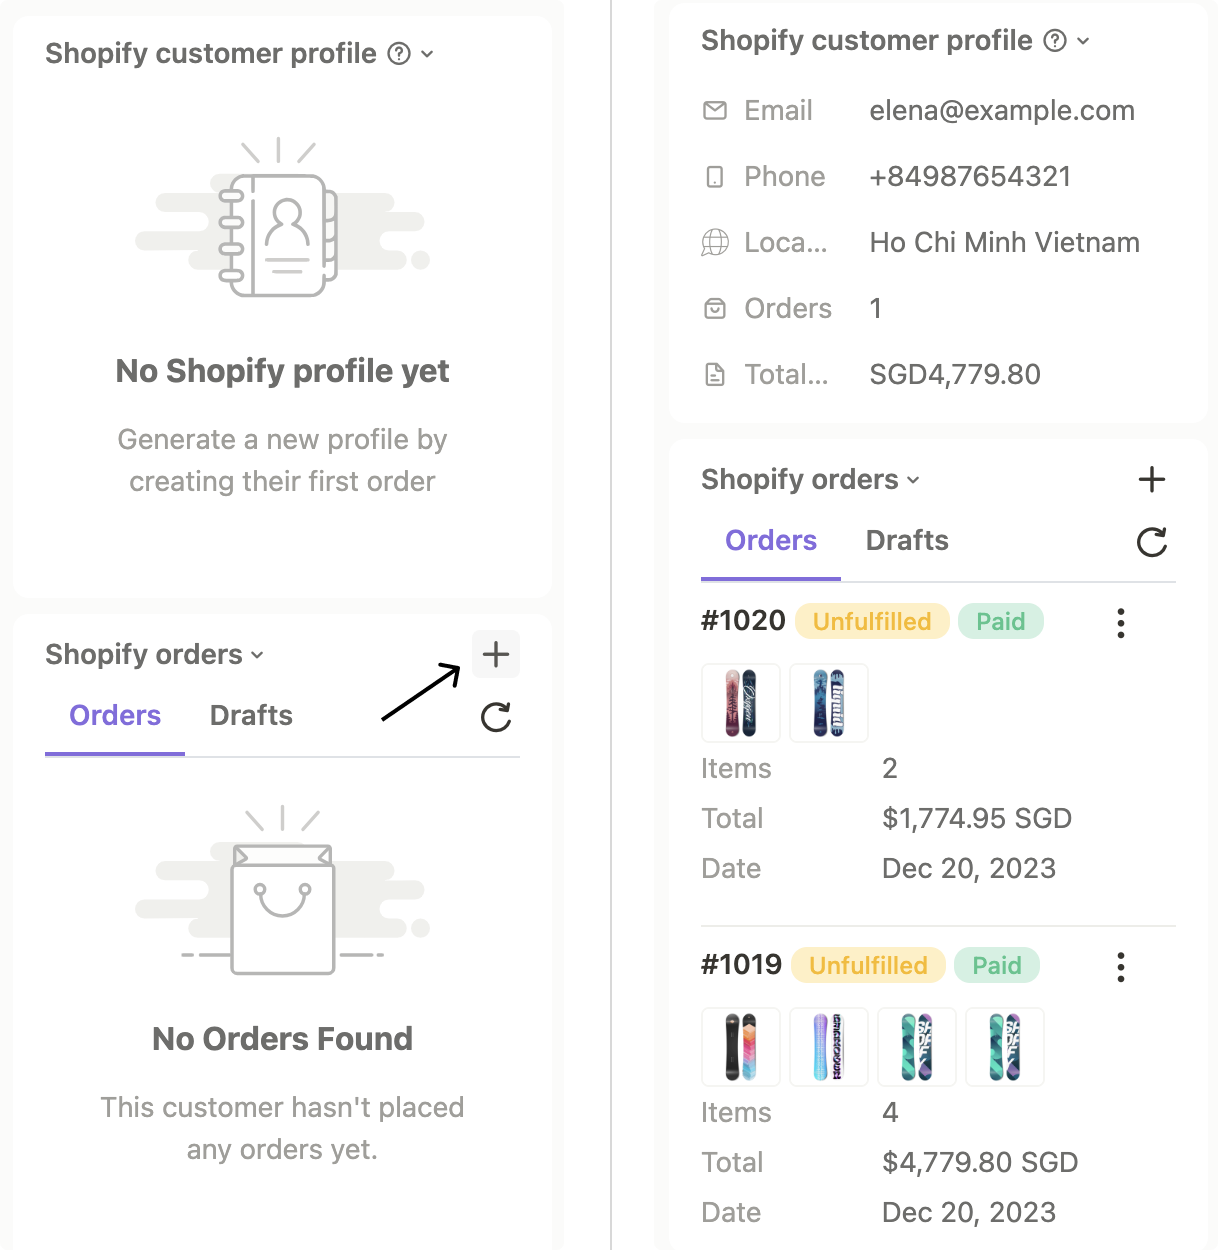 Shopify customer profile